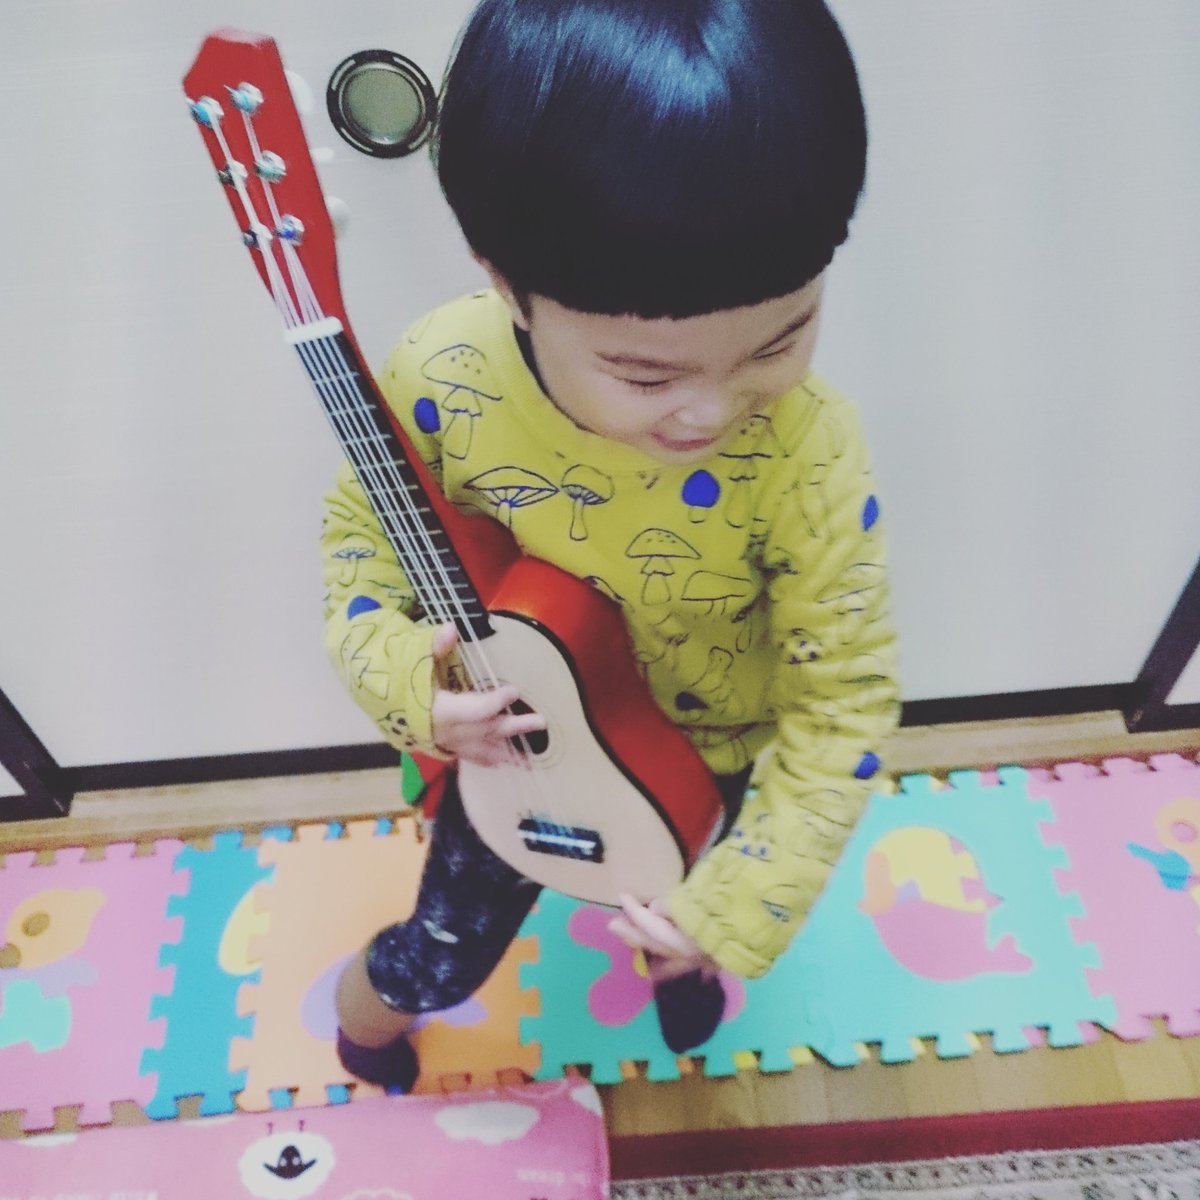 Mameko Sur Twitter ごほうびにおもちゃギターを手にいれて 霧の中のジョニーごっこ 子供 ギター おもちゃ Guitar Child Kids Toys 墓場鬼太郎 霧の中のジョニー 水木しげる